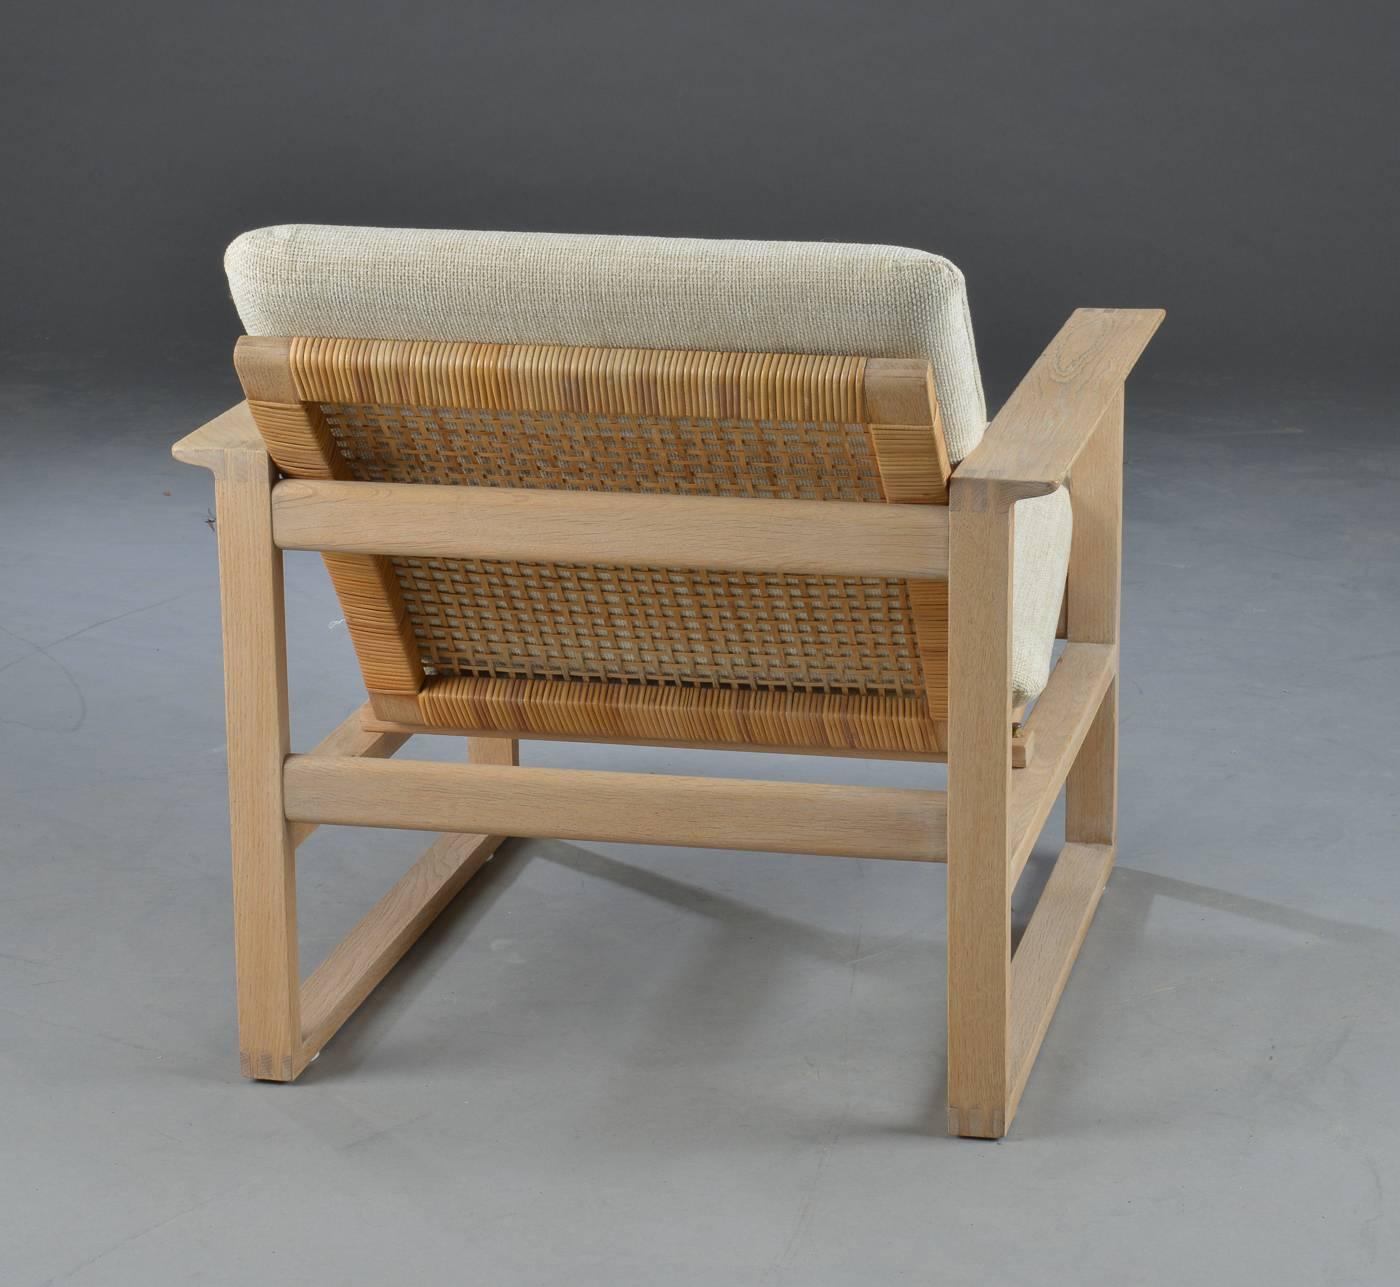 Danish Børge Mogensen Oak Lounge Sled Chair 2256 for Fredericia Furniture Designed 1956